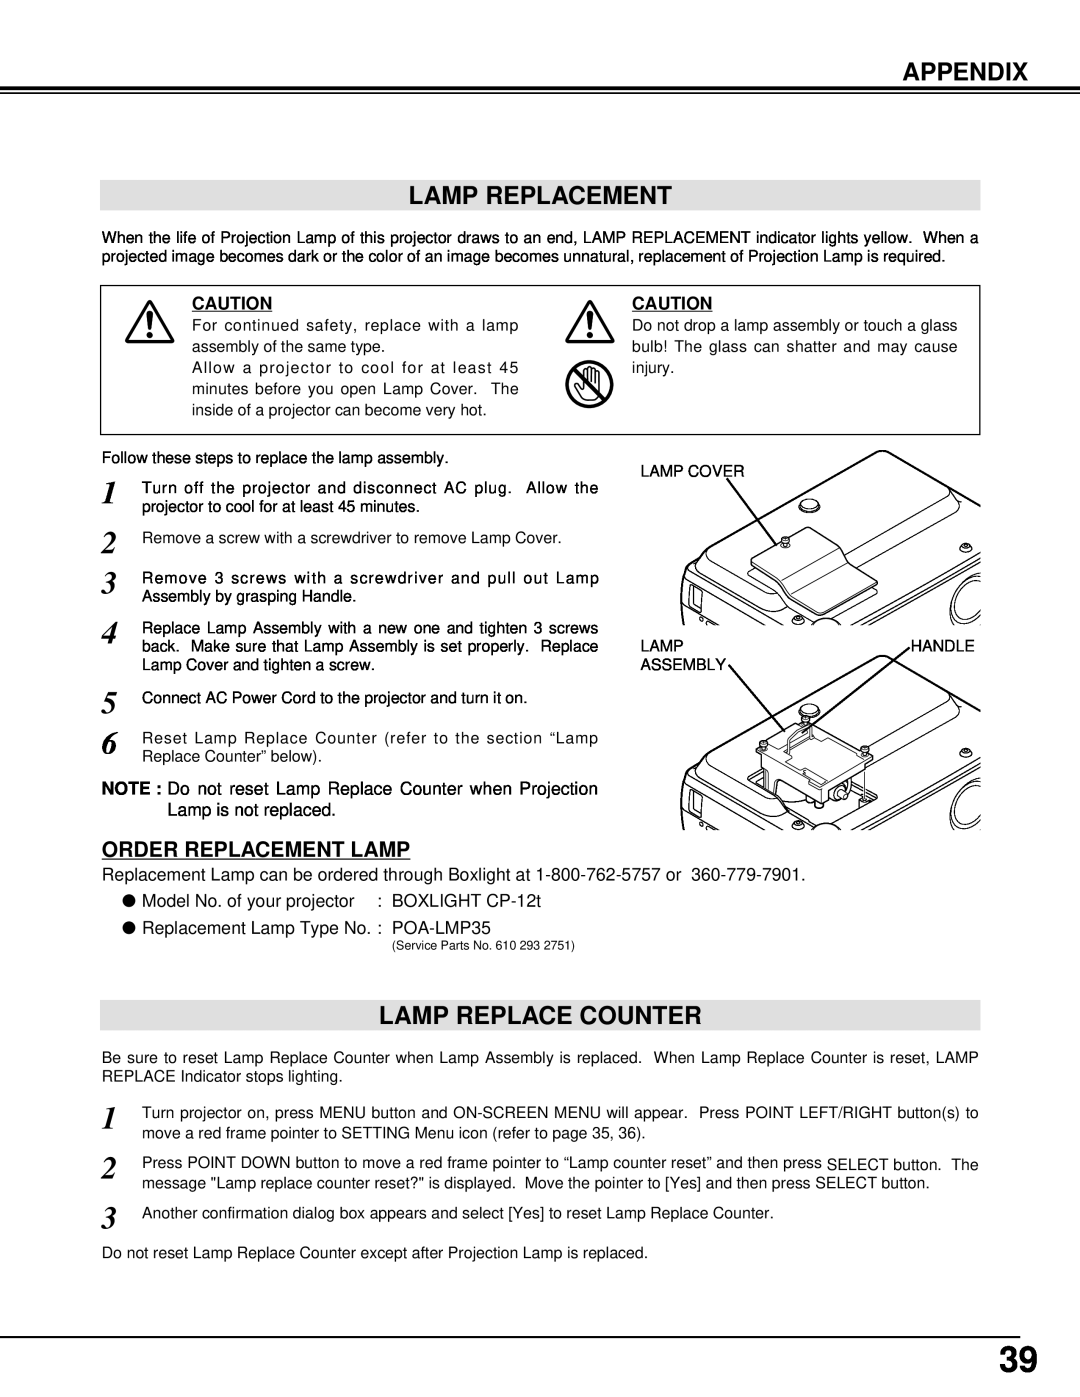 BOXLIGHT cp-12t manual Appendix Lamp Replacement, Lamp Replace Counter, Order Replacement Lamp 